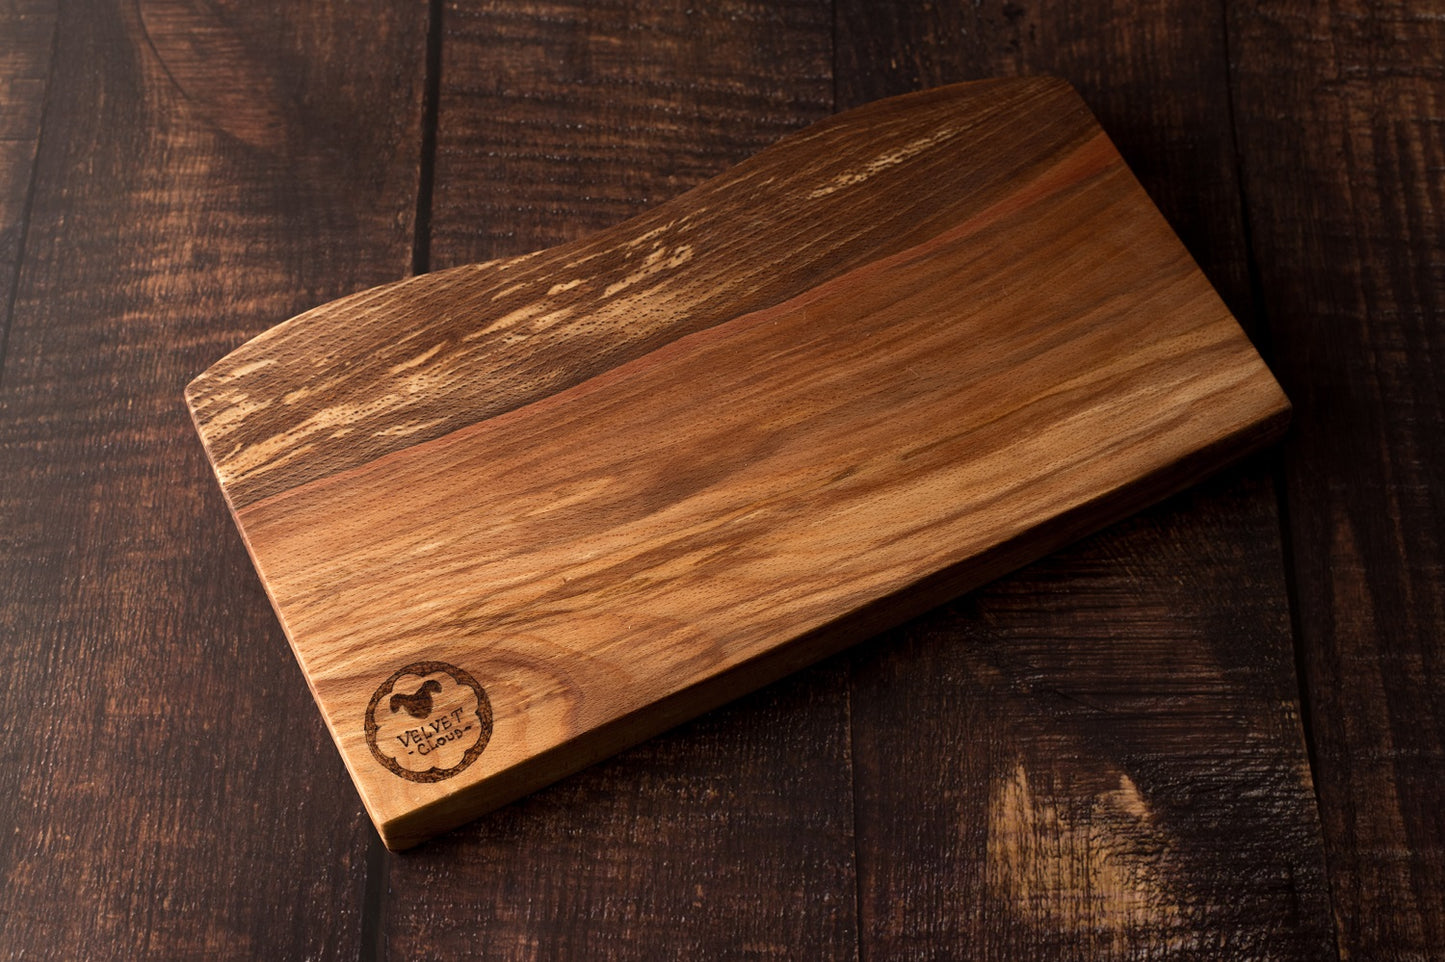 Irish Handcrafted Wooden Cheese Board